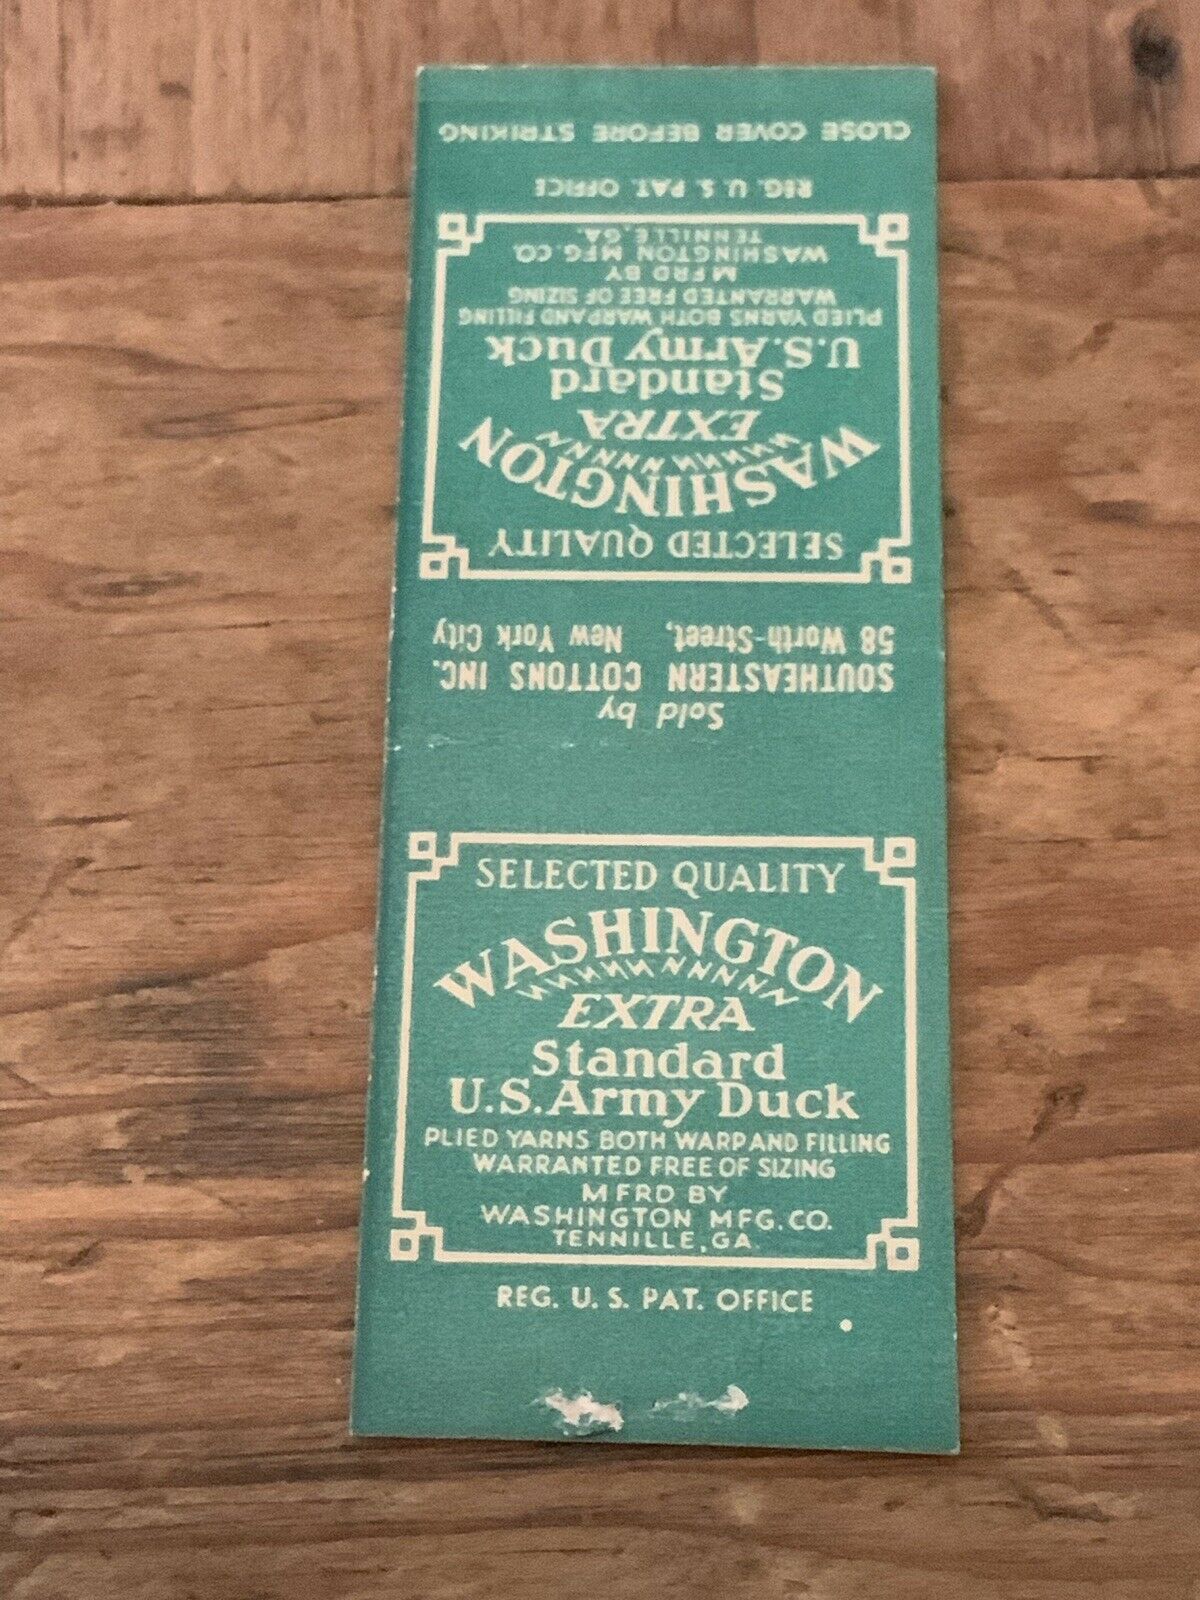 Washington Extra Standard U.S. Army Duck Southeastern Cottons Bobtail Matchcover